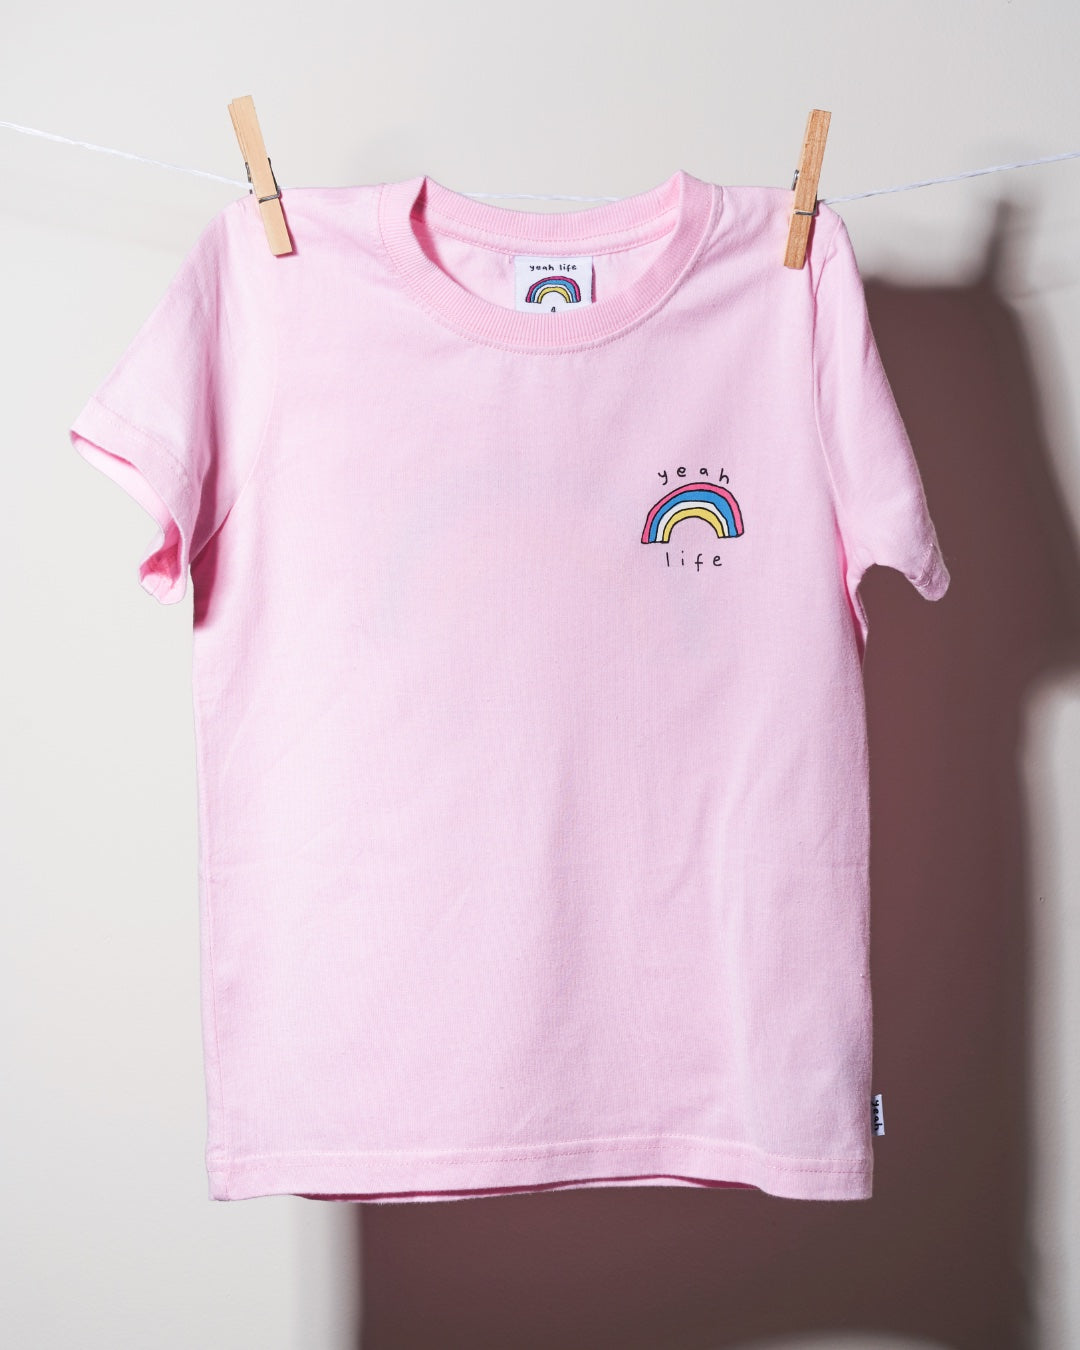 YEAH LIFE Dusty Pink Kids Hemp Organic Cotton T-Shirt